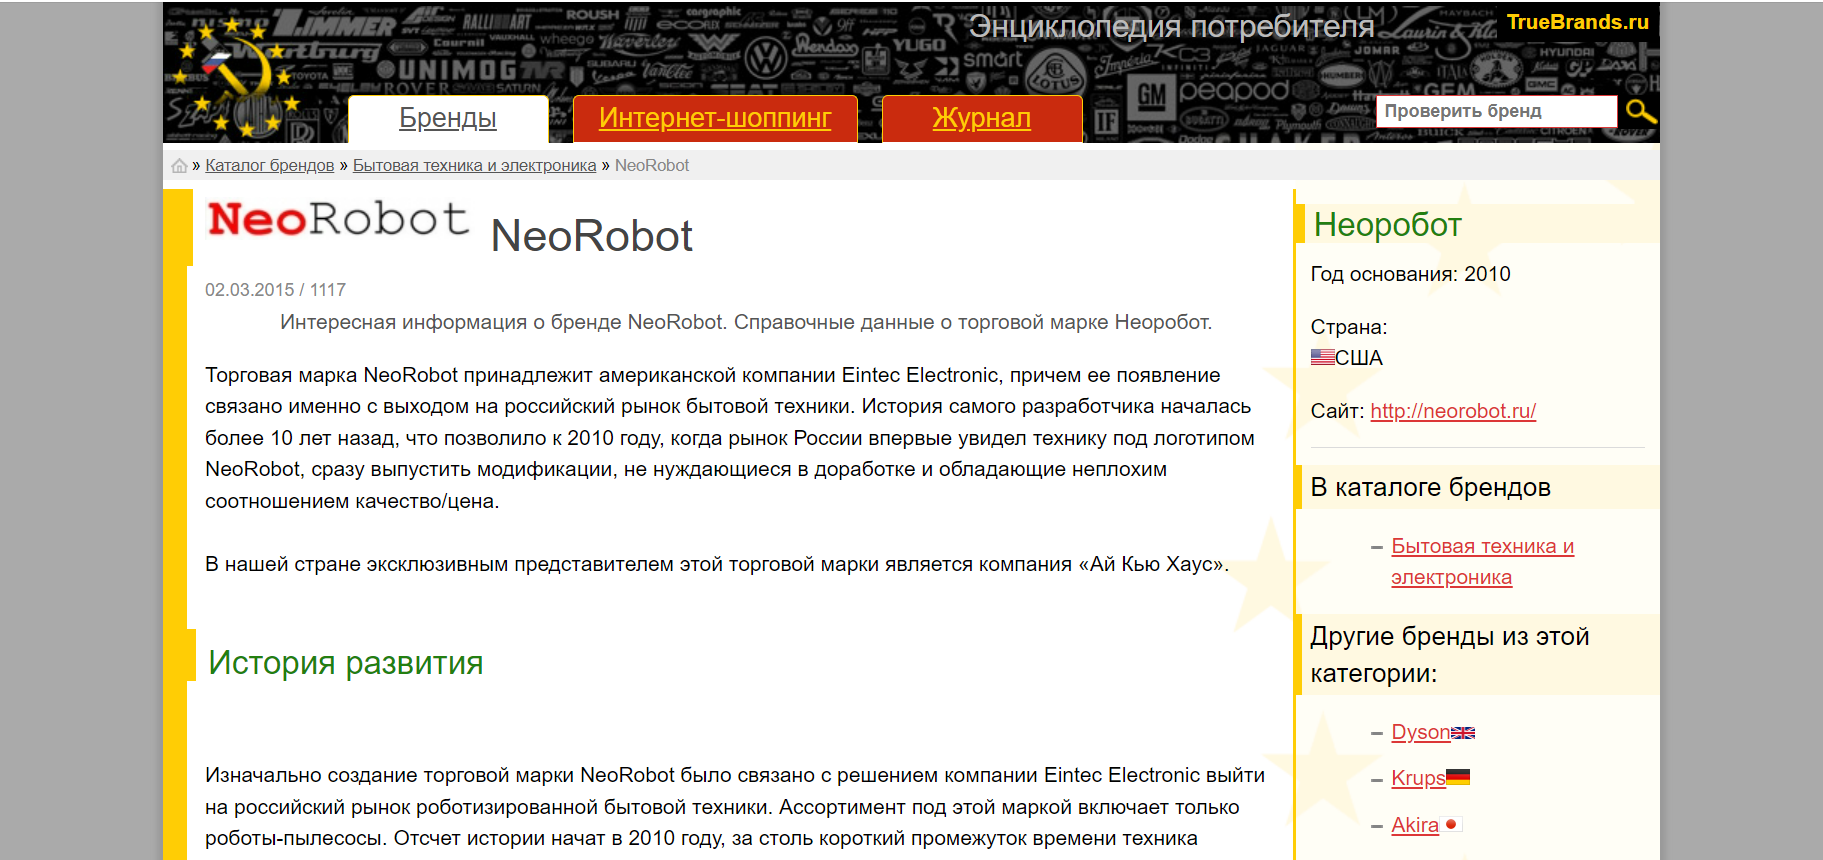 NeoRobot